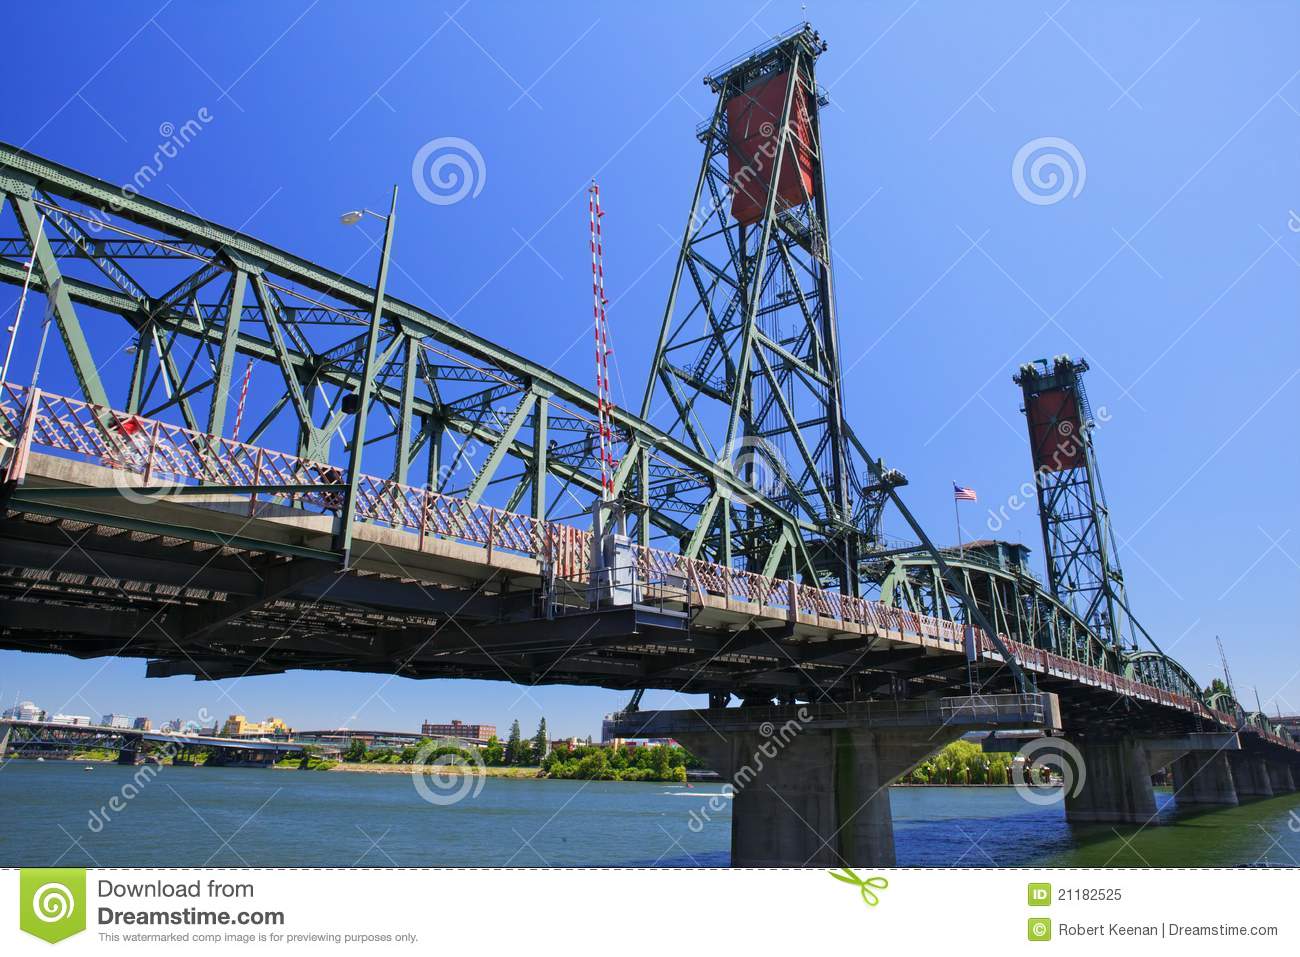 Portland Hawthorne Bridge Royalty Free Stock Photo   Image  21182525